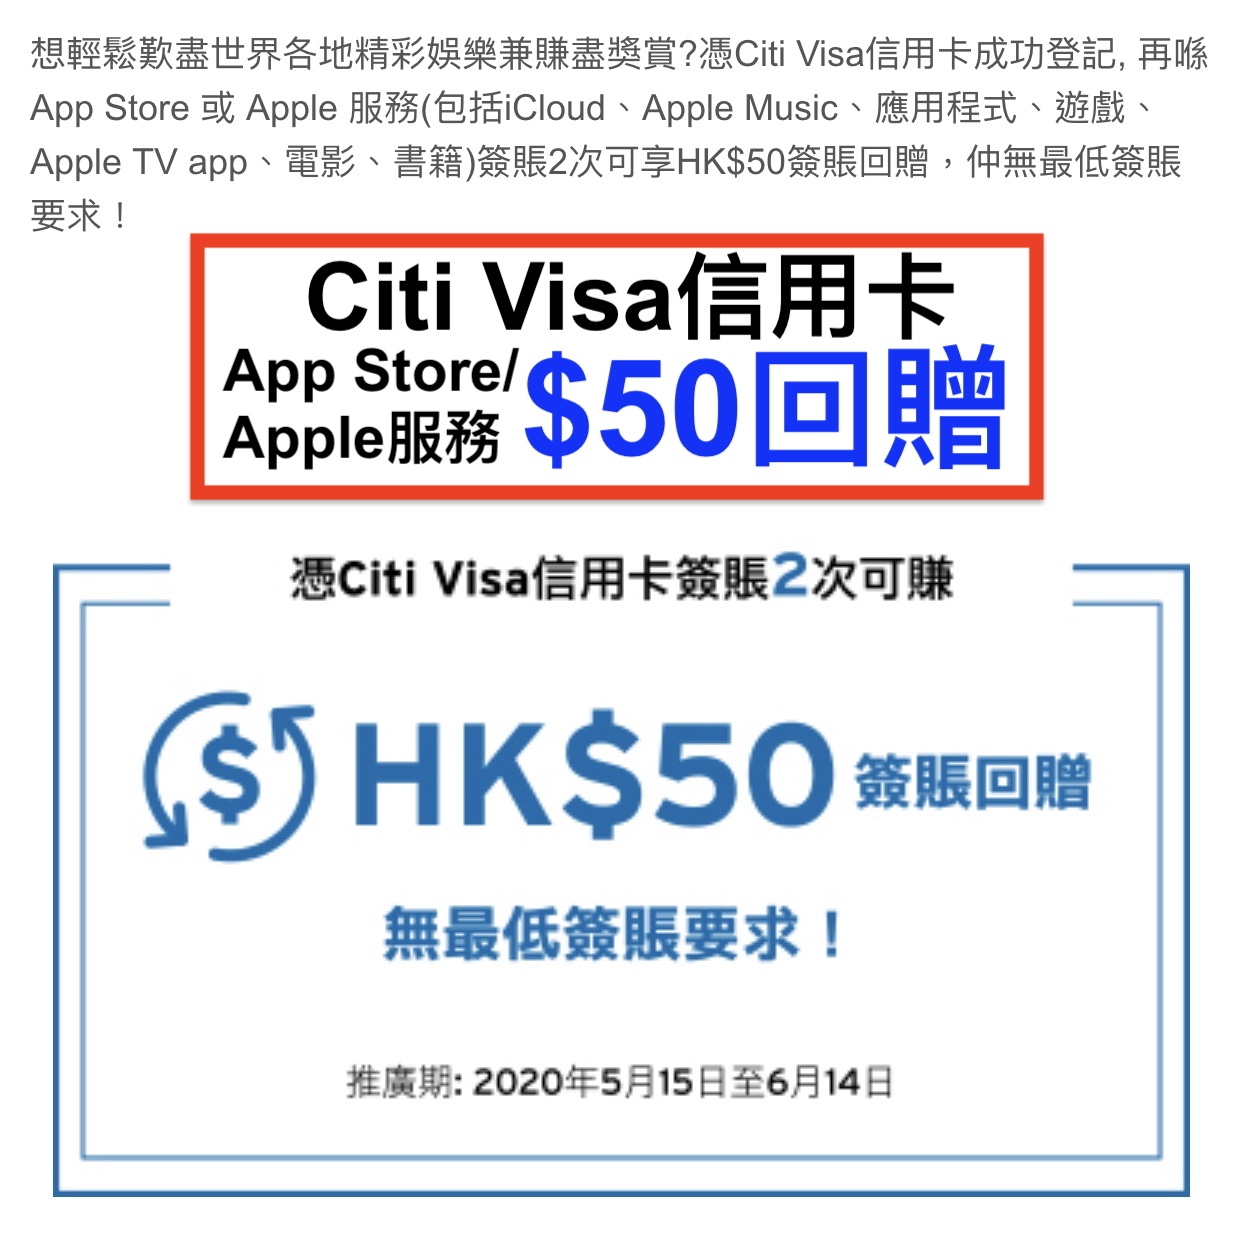 Citi Visa信用卡App Store 或 Apple 服務HK$50簽賬回贈